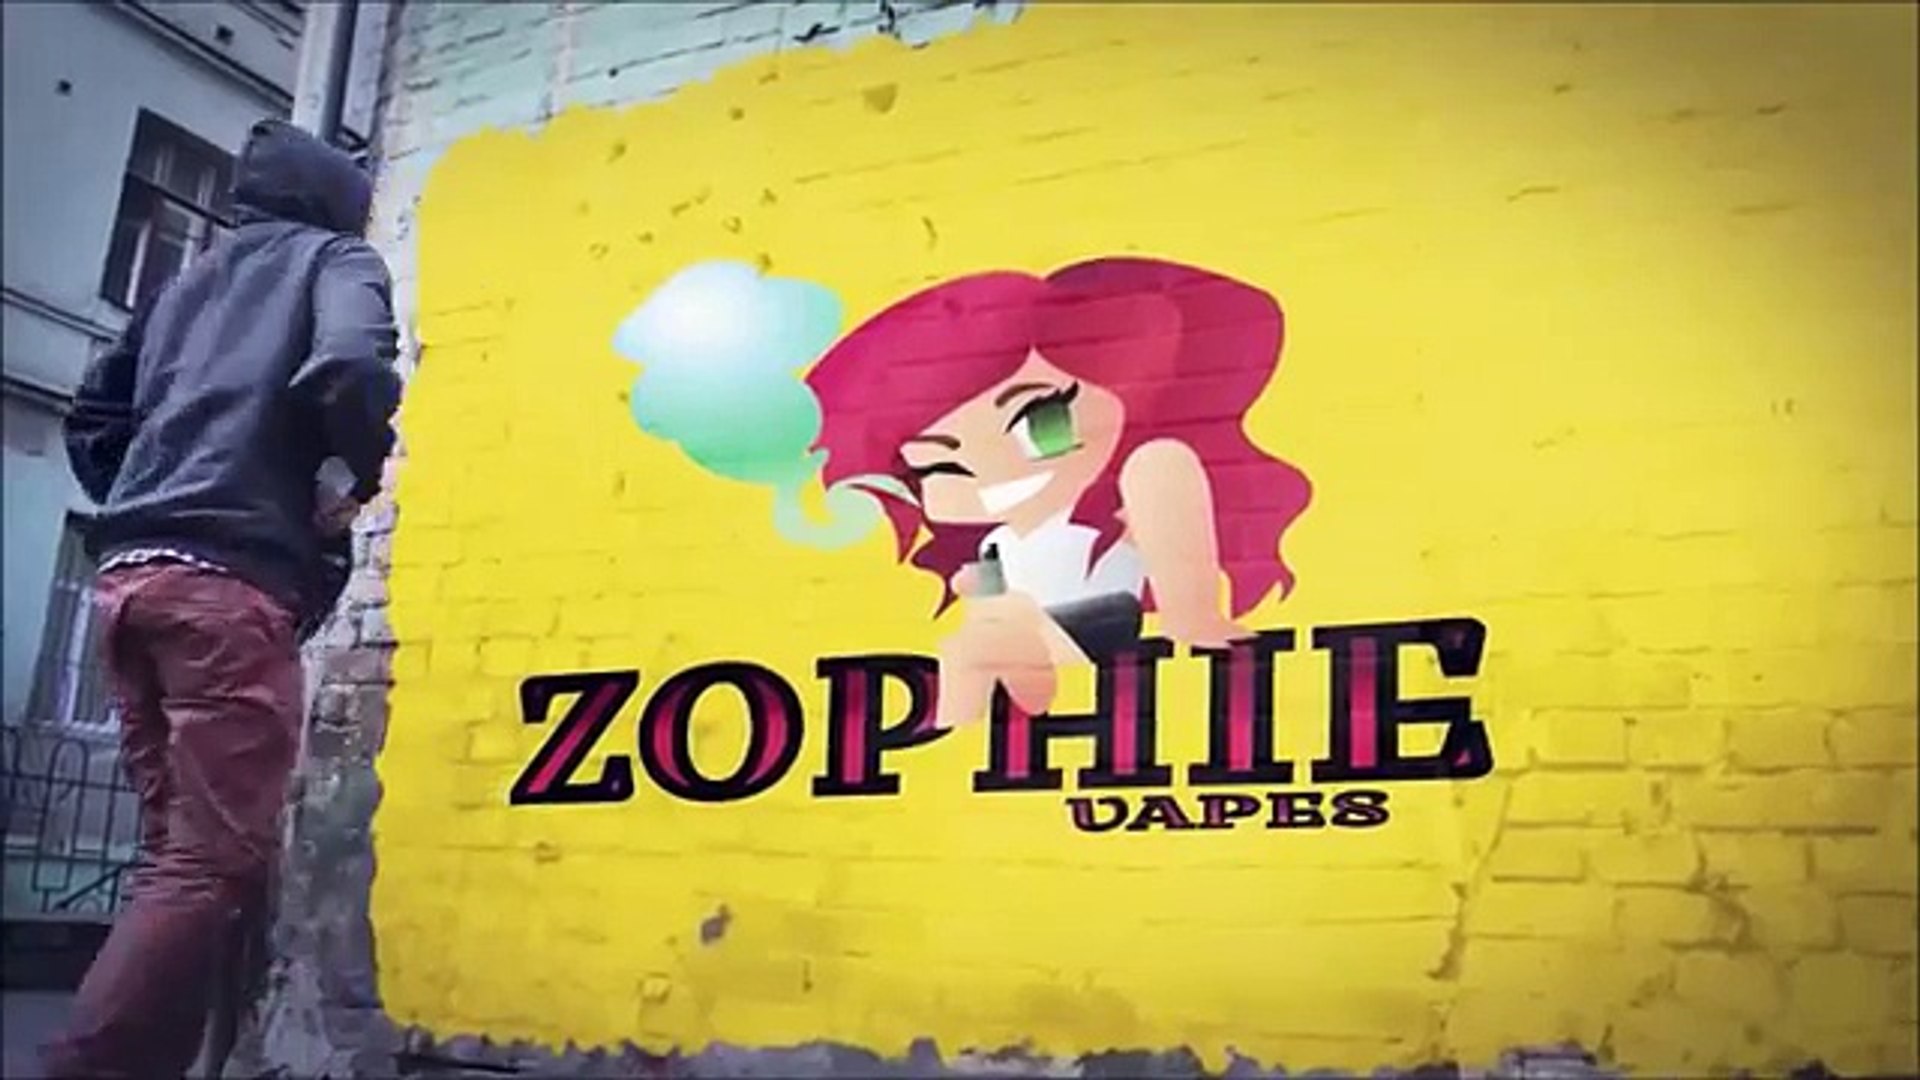 Zophie vapes hot